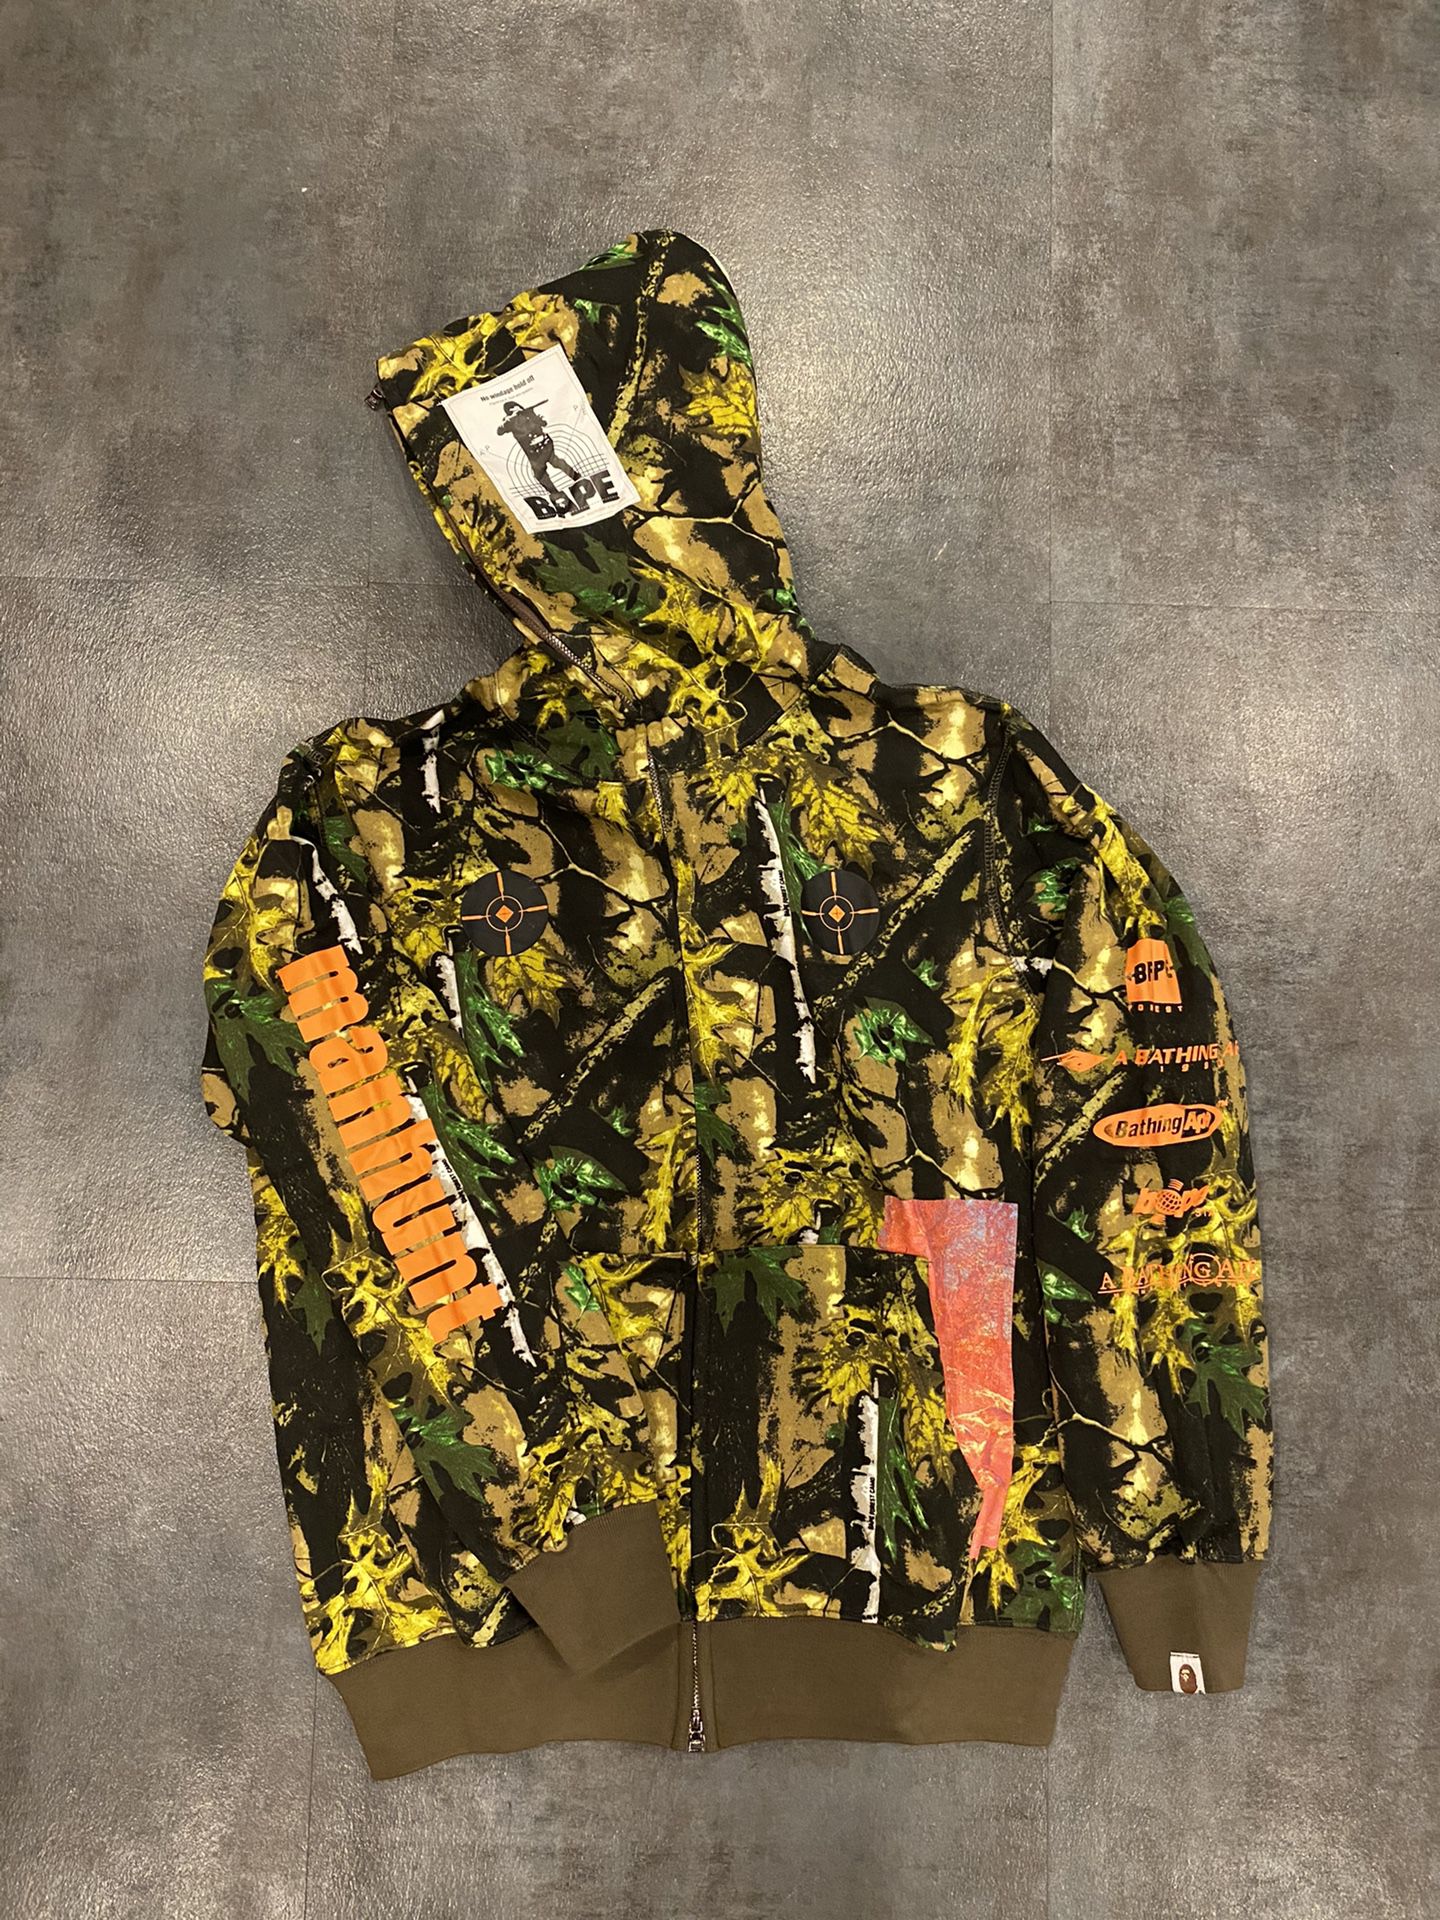 Sniper green bape hoodie XL L M